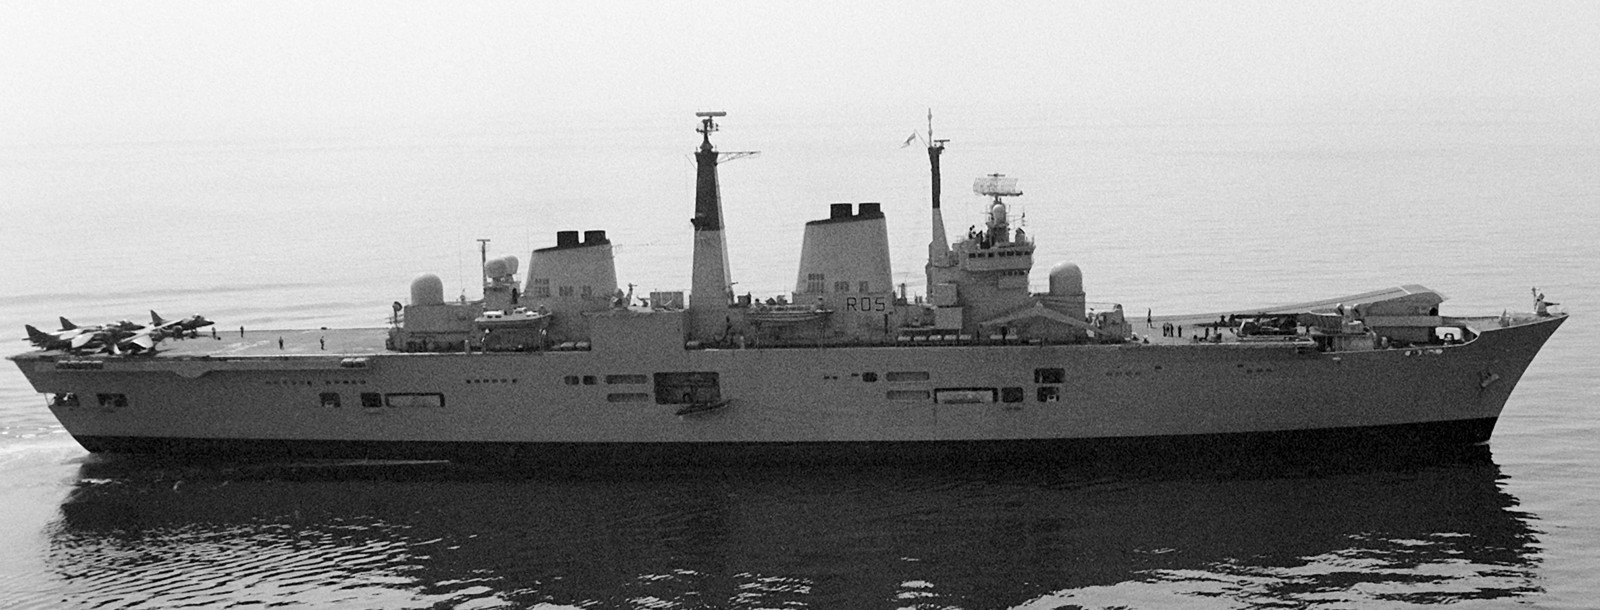 r-05 hms invincible class aircraft carrier royal navy 08